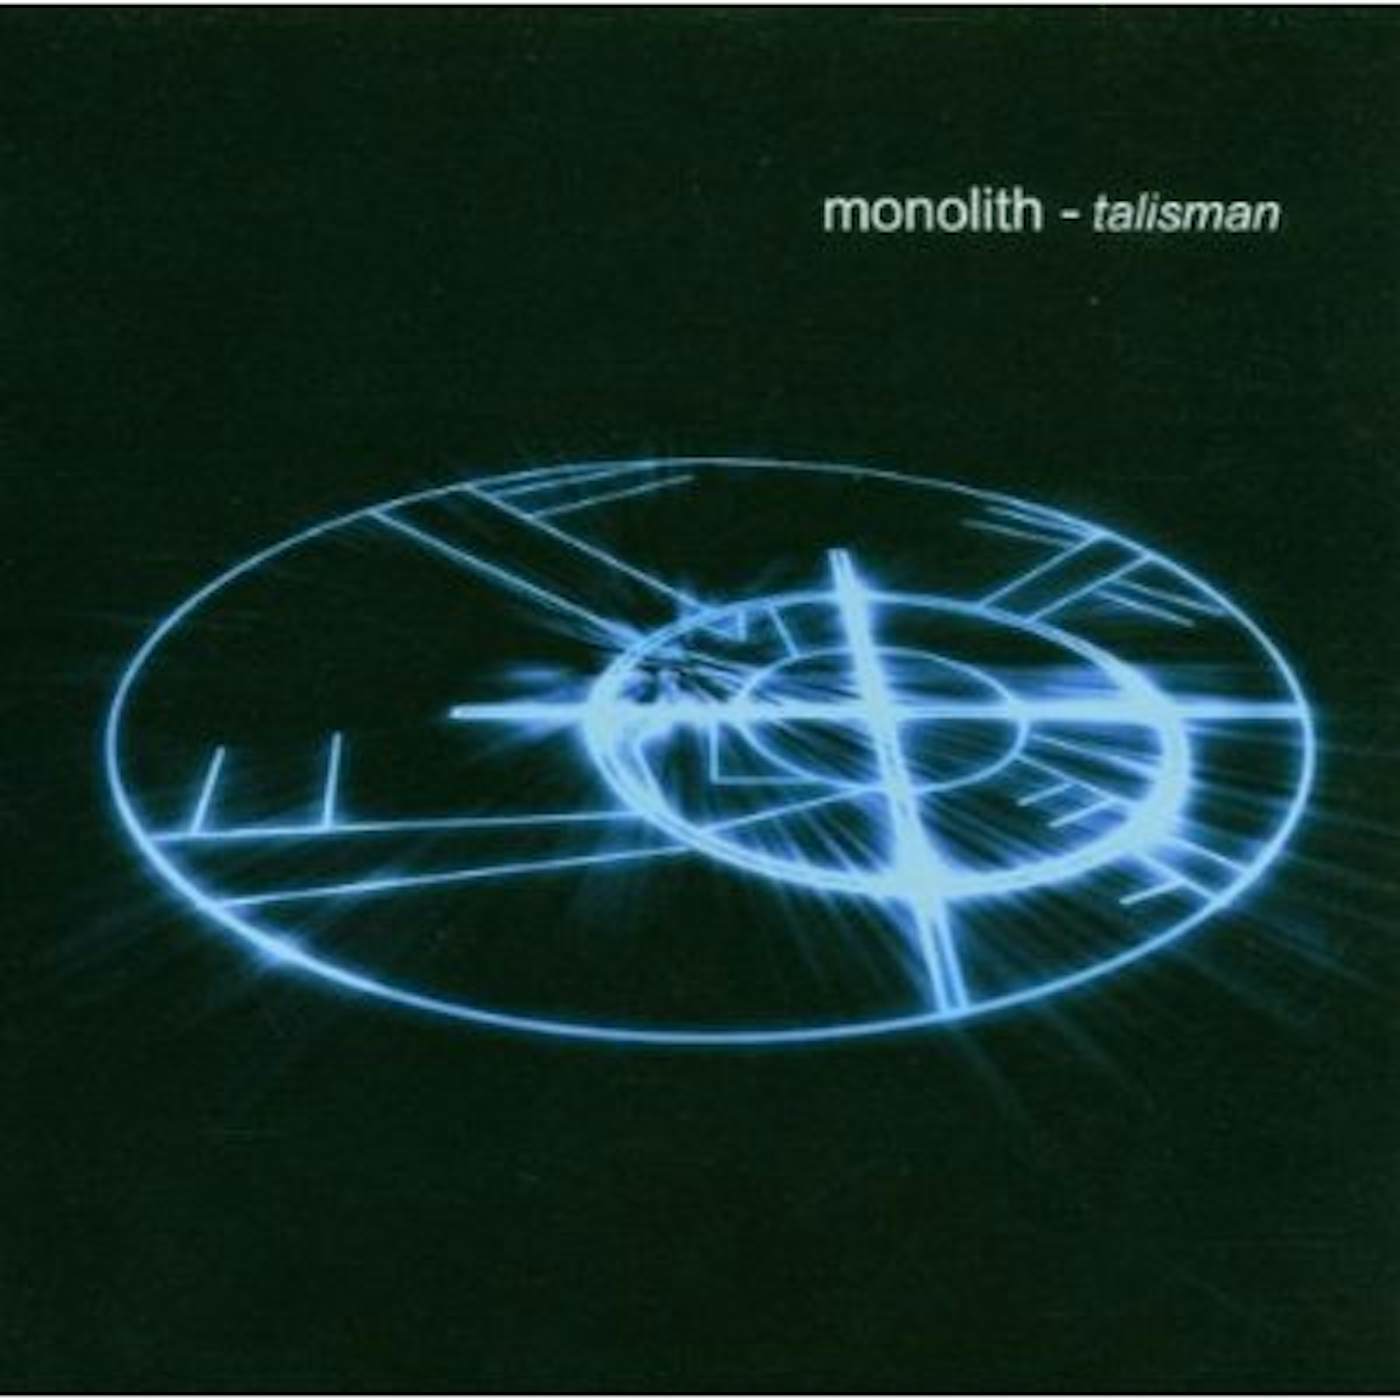 The Monolith TALISMAN CD